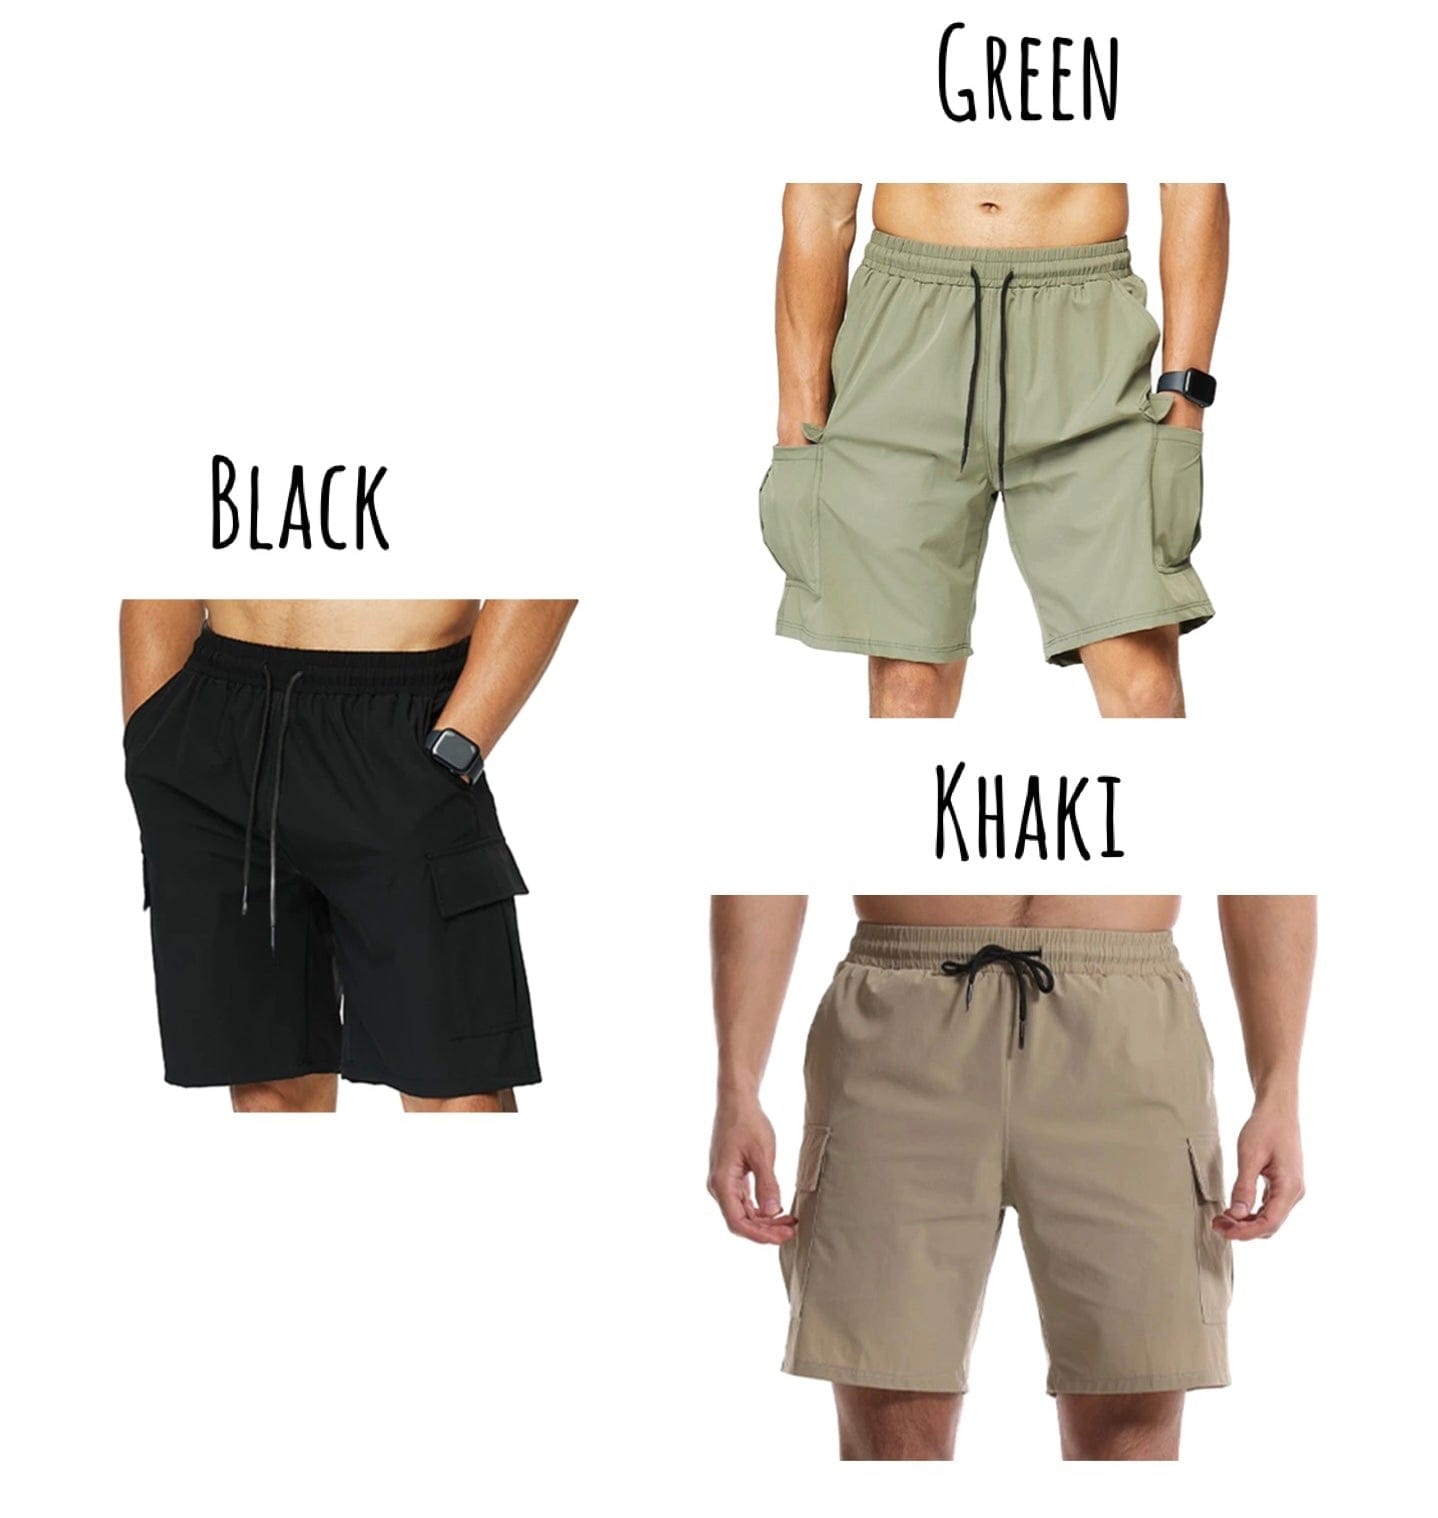 Essential men drawstring side pocket shorts (10 inch inseam)